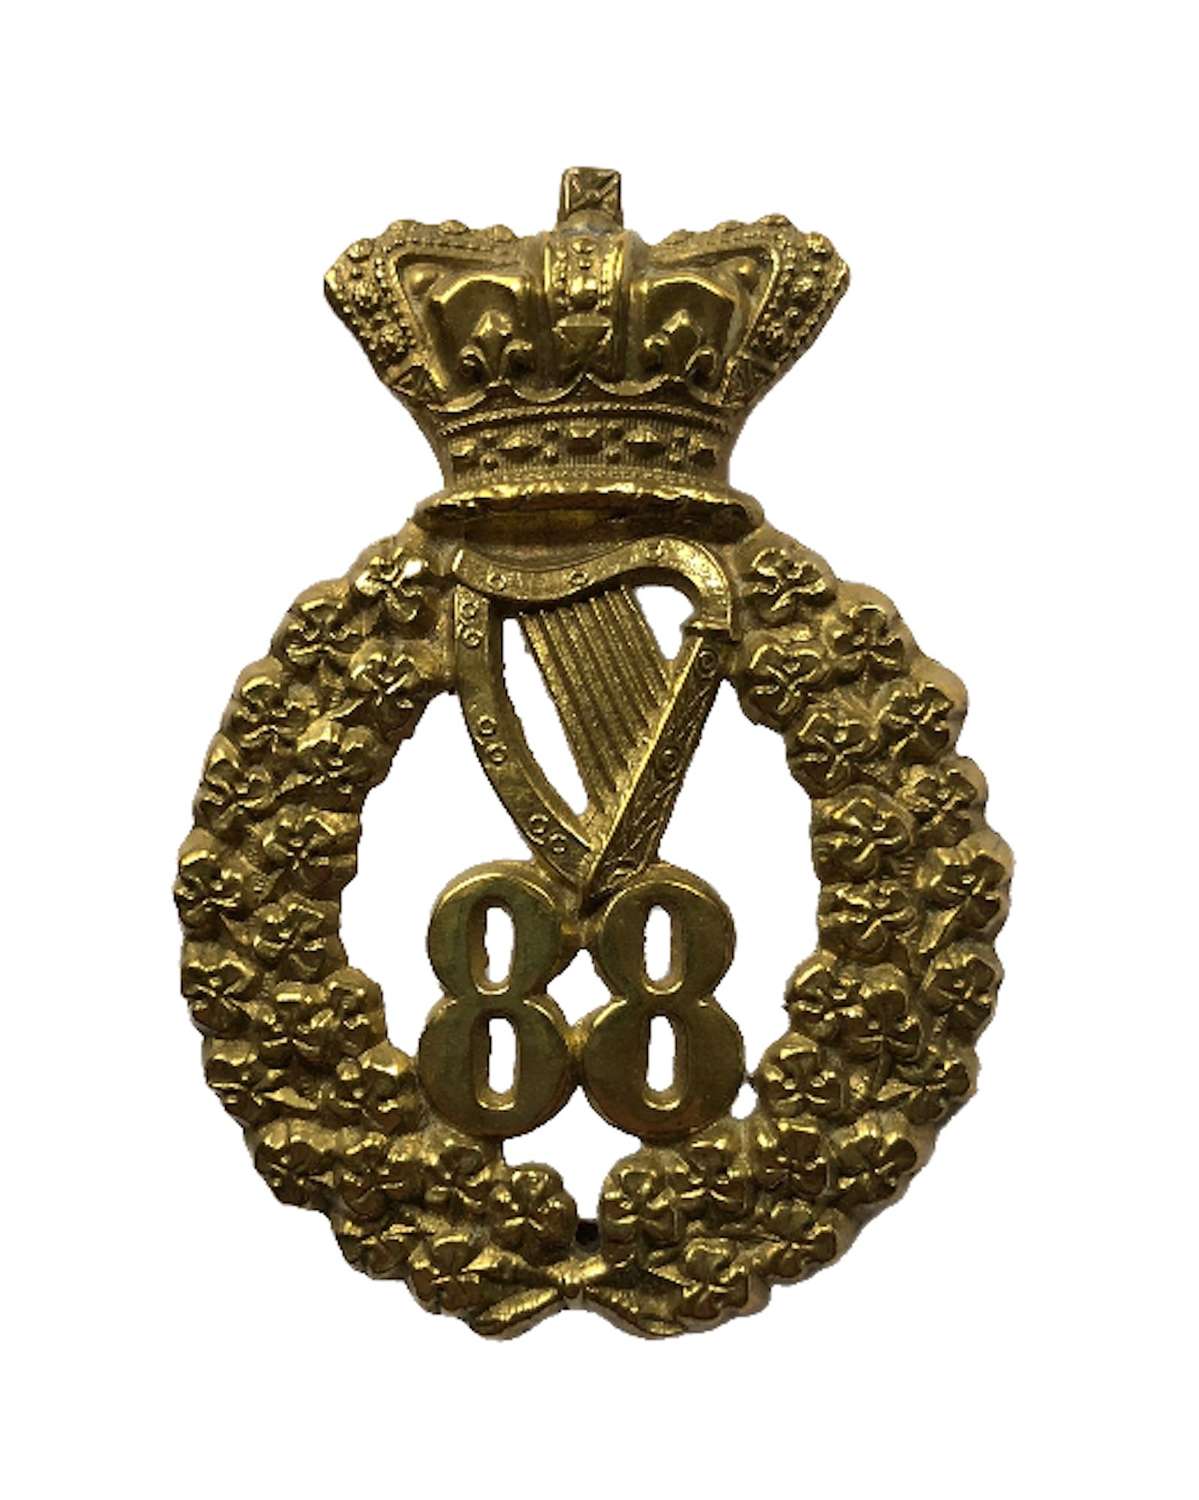 88th (Connaught Rangers) Regiment Victorian glengarry badge c1873-81